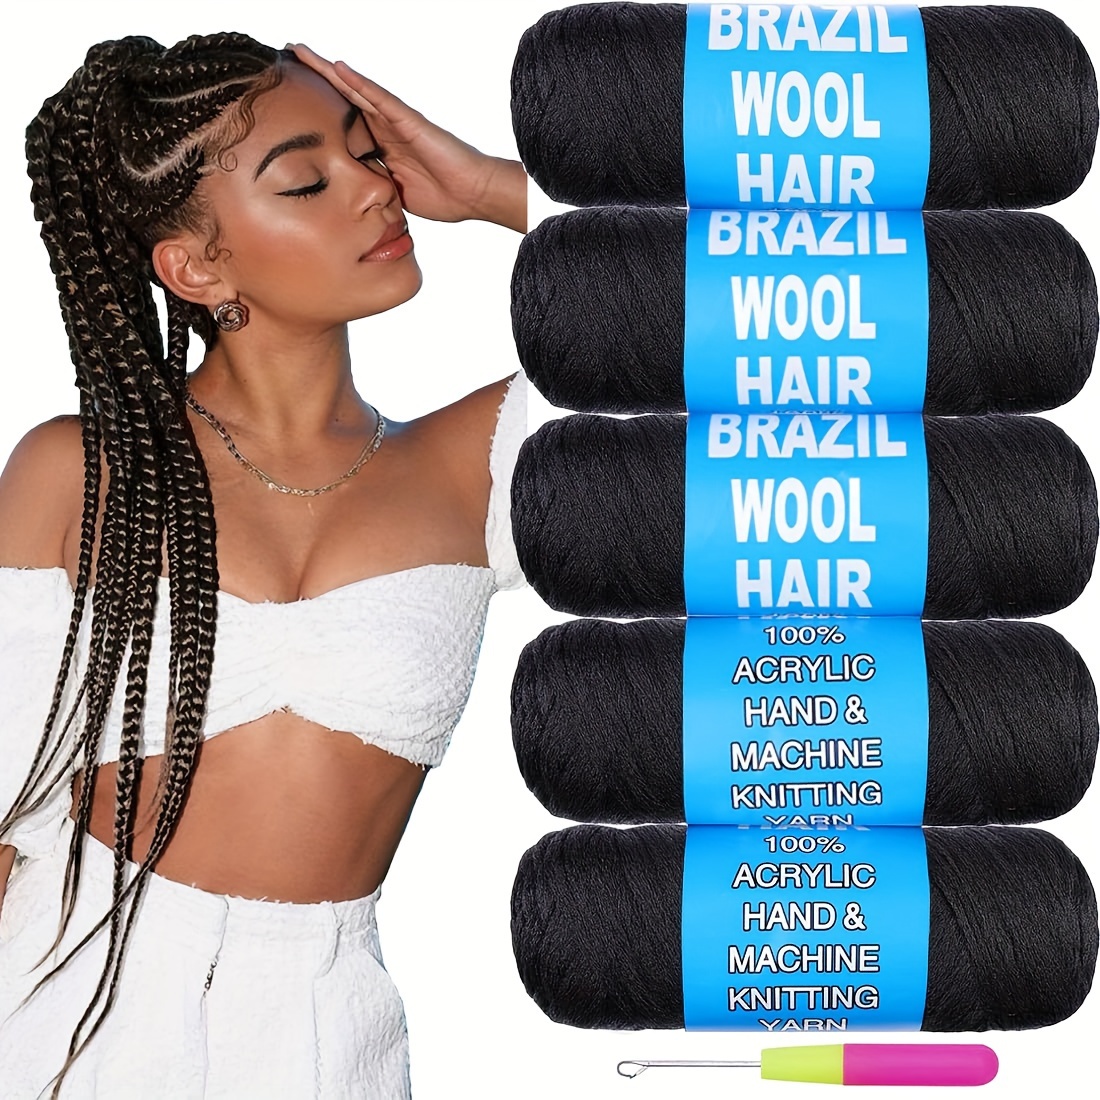 Brazilian Yarn for Braids High-quality Acrylic Wool for Hair Jumbo Braids,  Senegalese Twist, Wraps Natural, Knitting Hair, Grey Hair Braids 